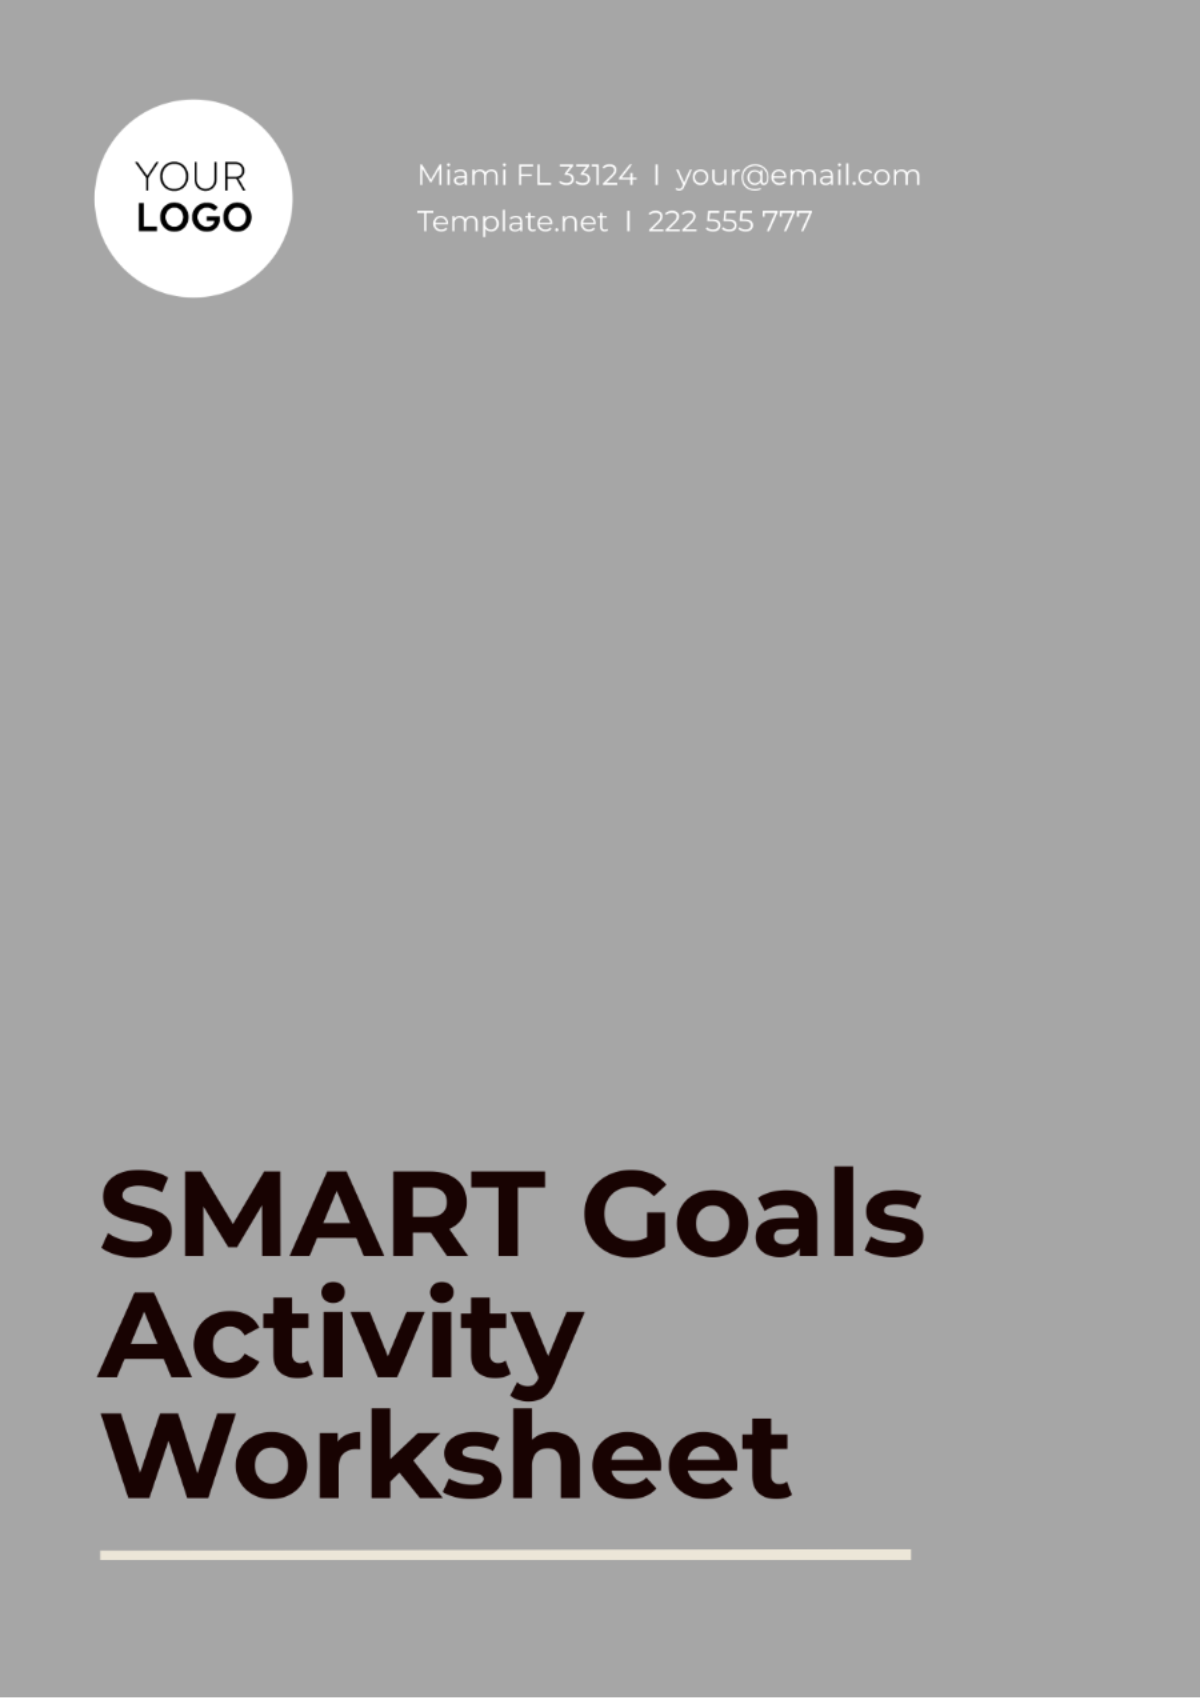 SMART Goals Activity Worksheet Template